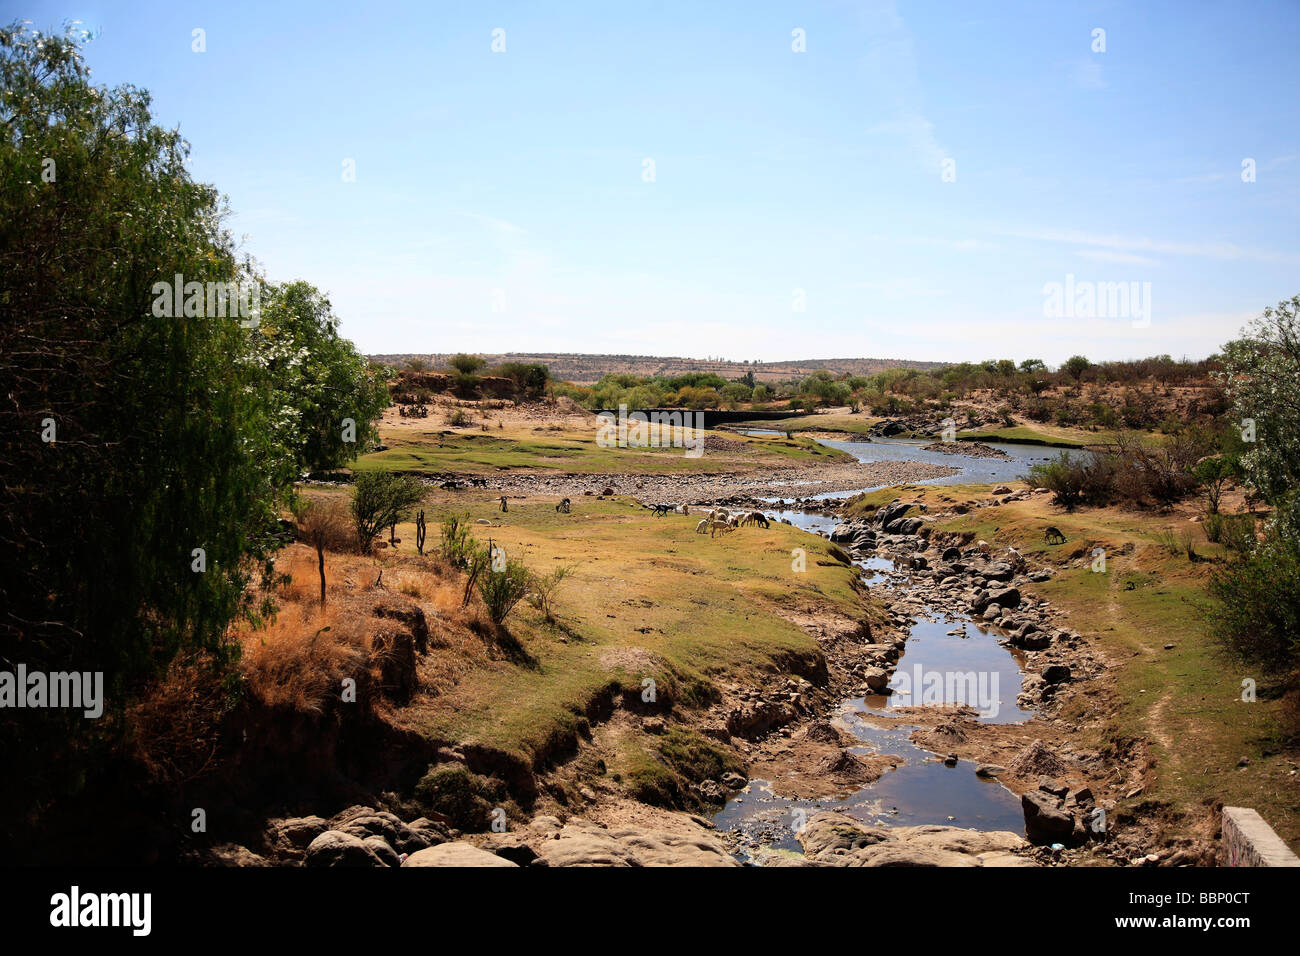 Landschaft-Fluss in einem nostalgischen Bild inspiriert Wildnis in Ruhe beautyful Horizont grün blaue Himmel Stockfoto